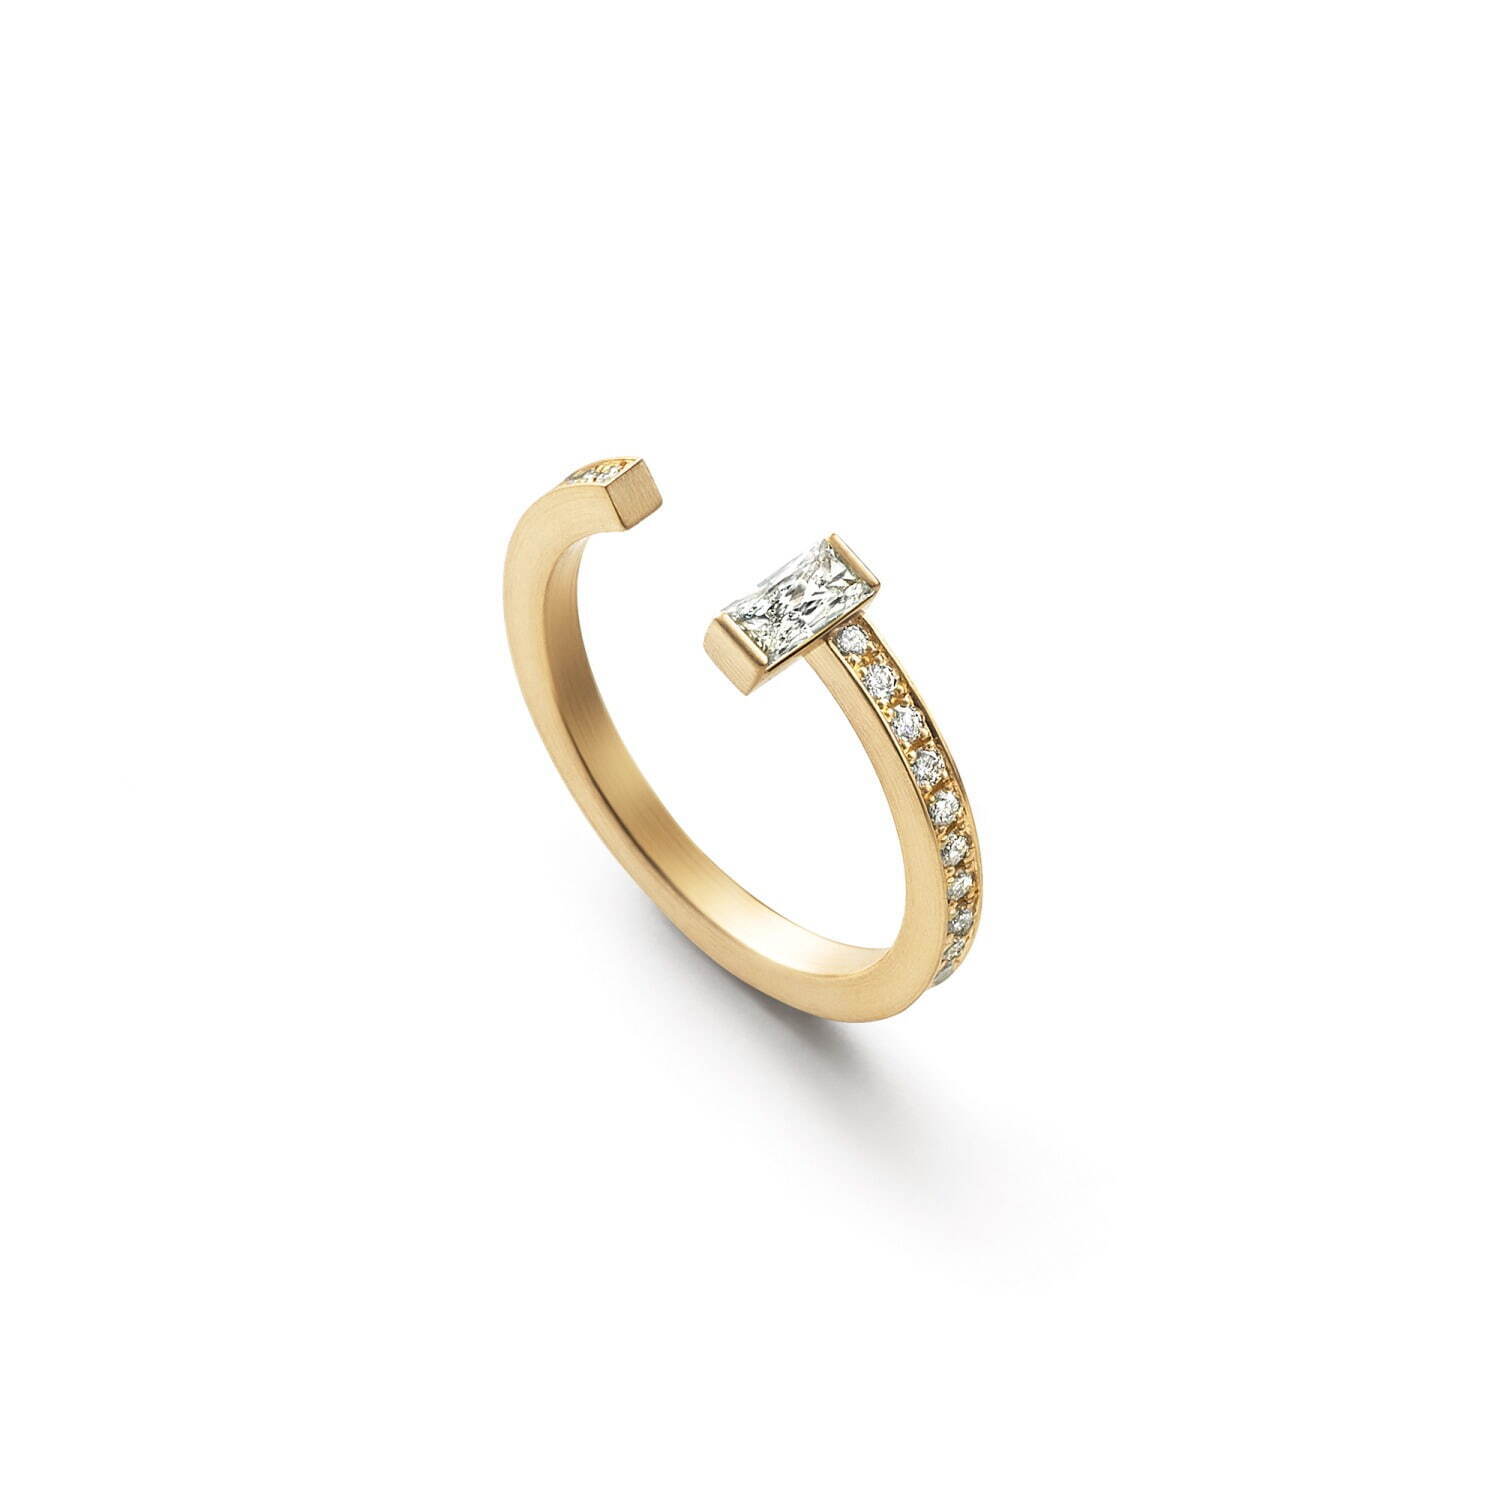 「One Stone Diamond Bond Ring 03」473,000円 素材:18K YG x Diamond